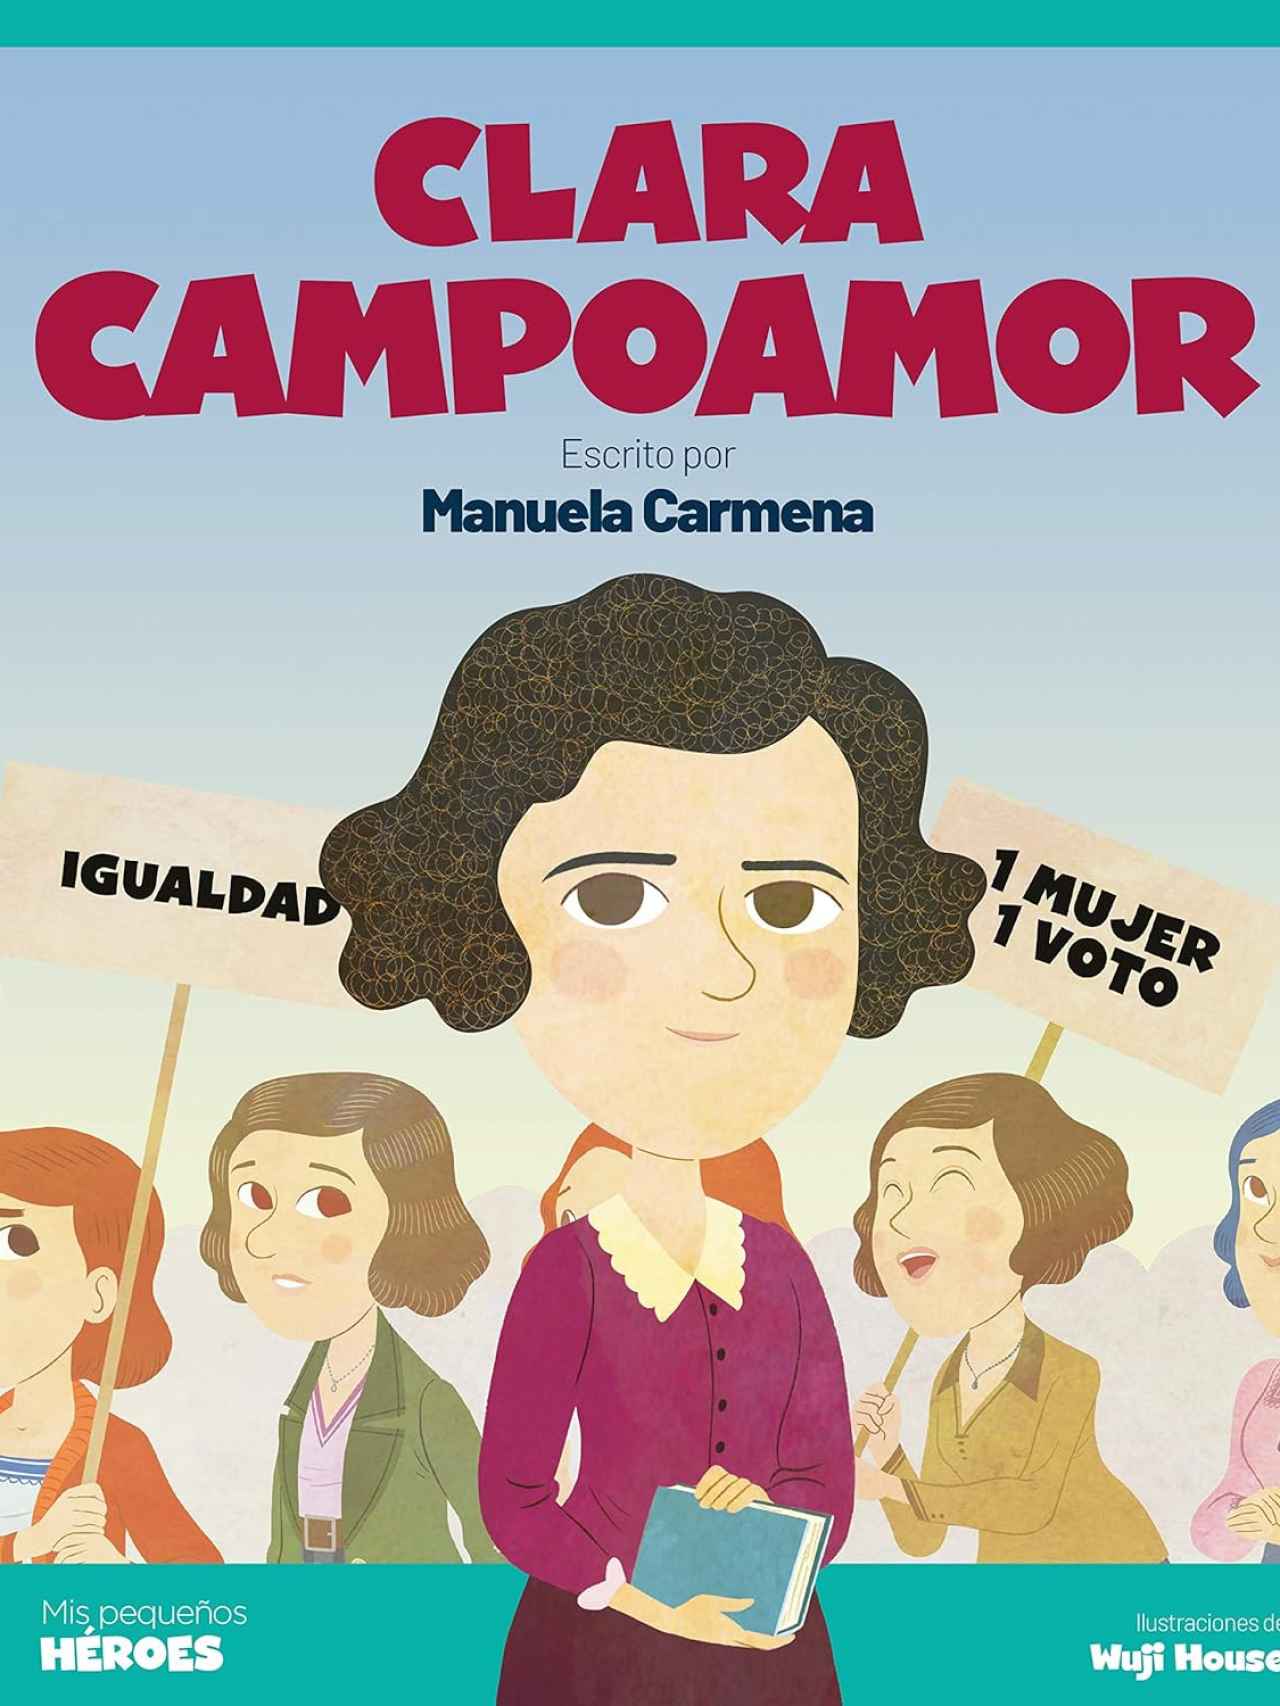 'Clara Campoamor'